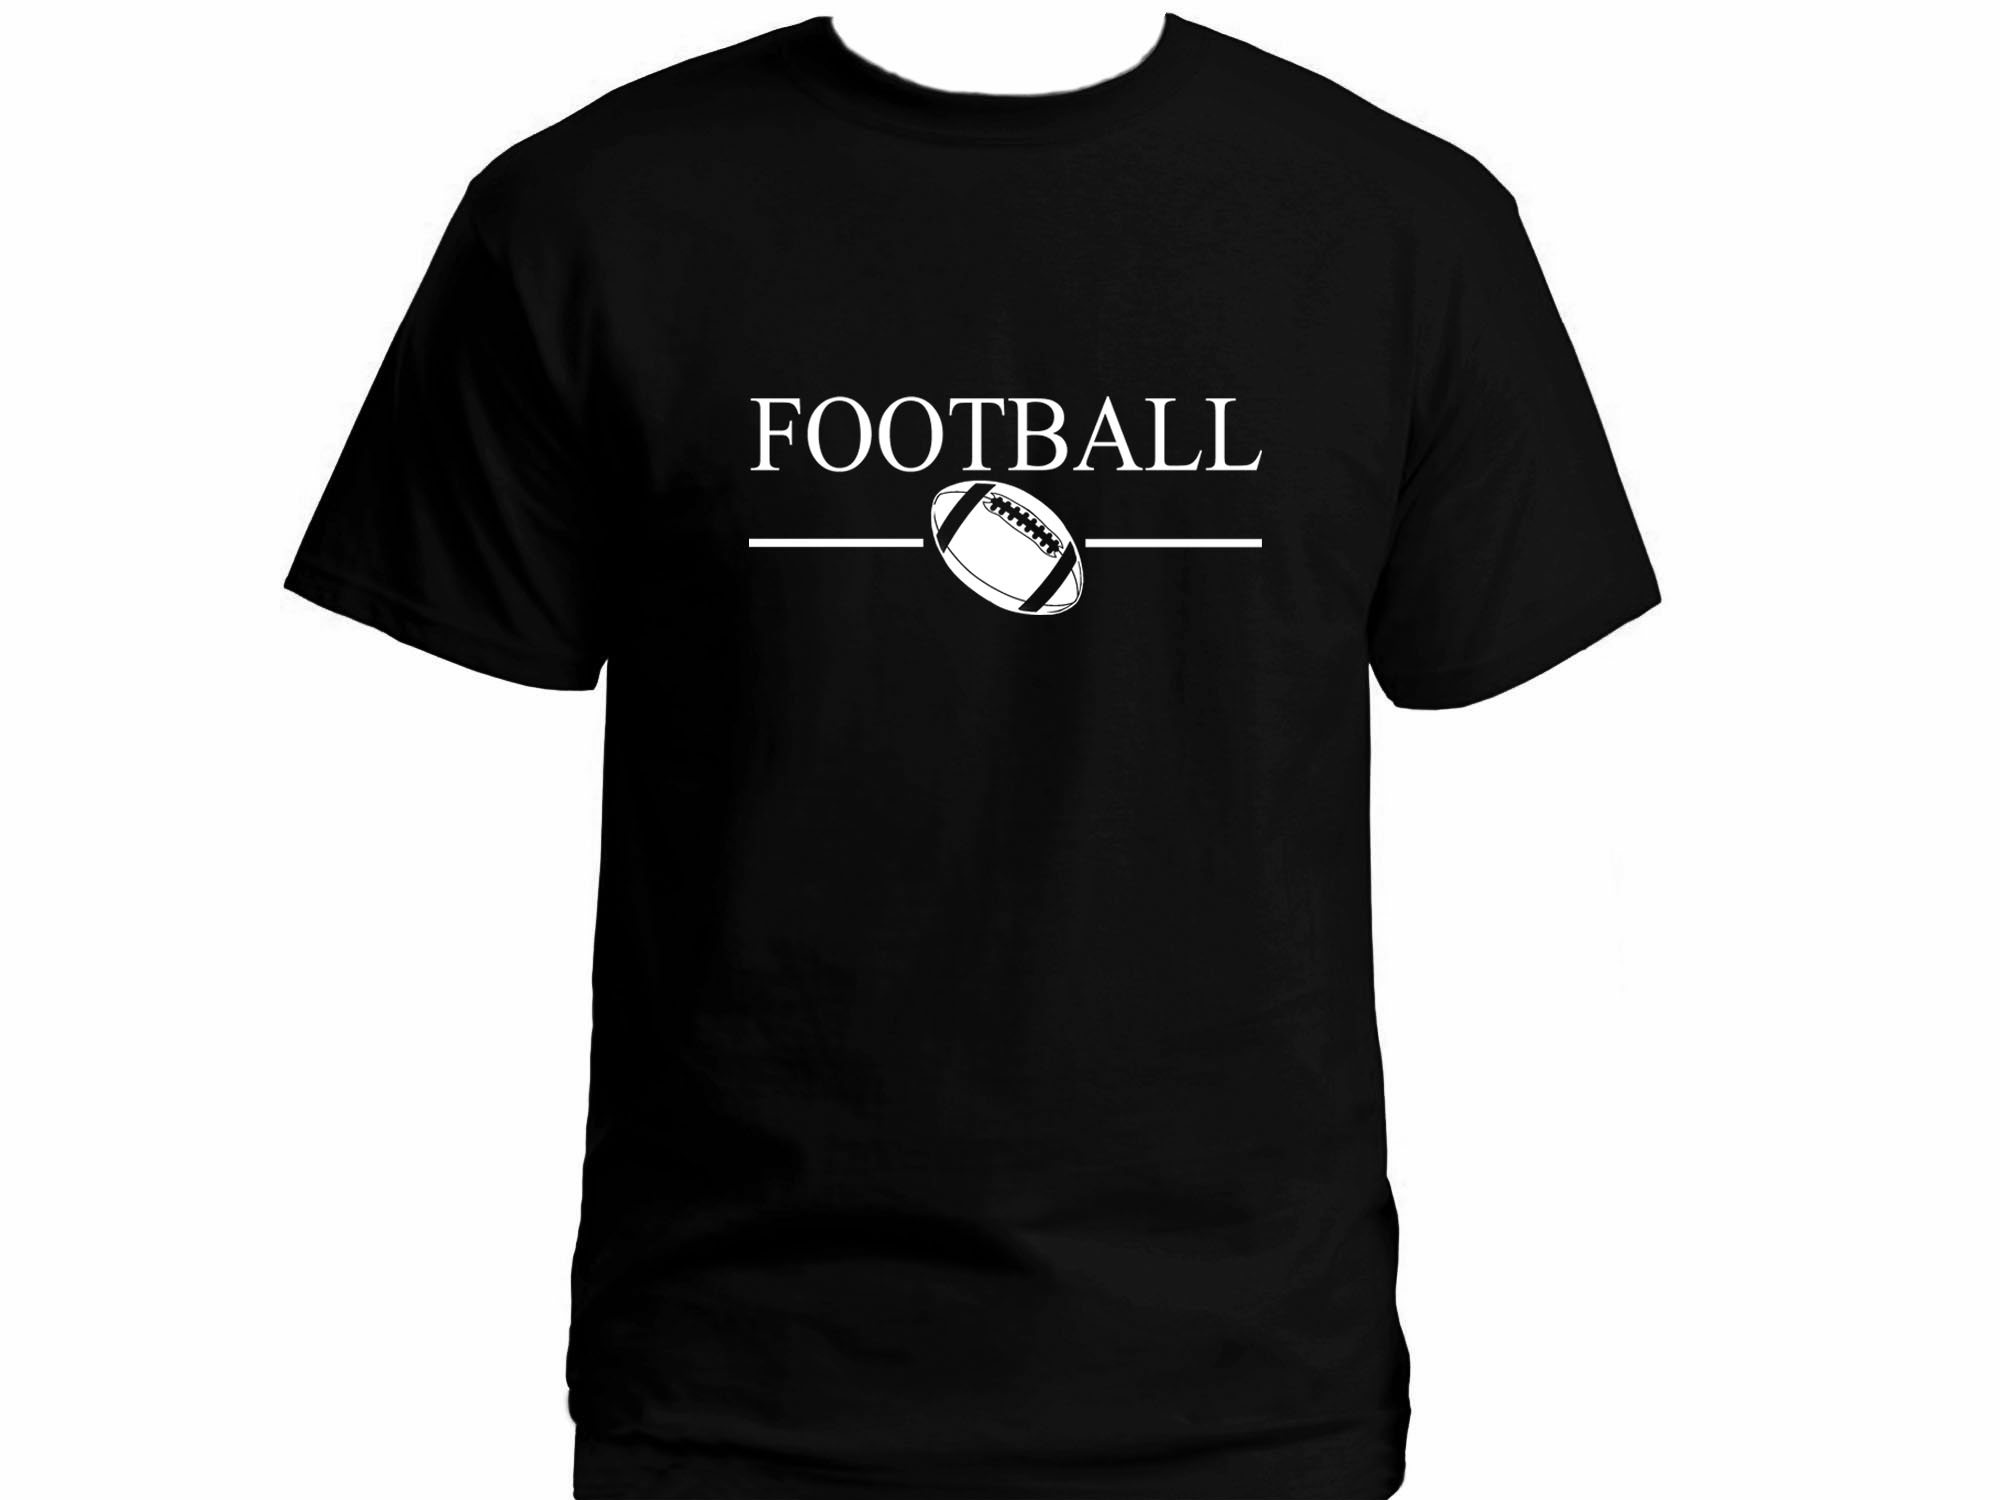 Football silk printed t-shirt